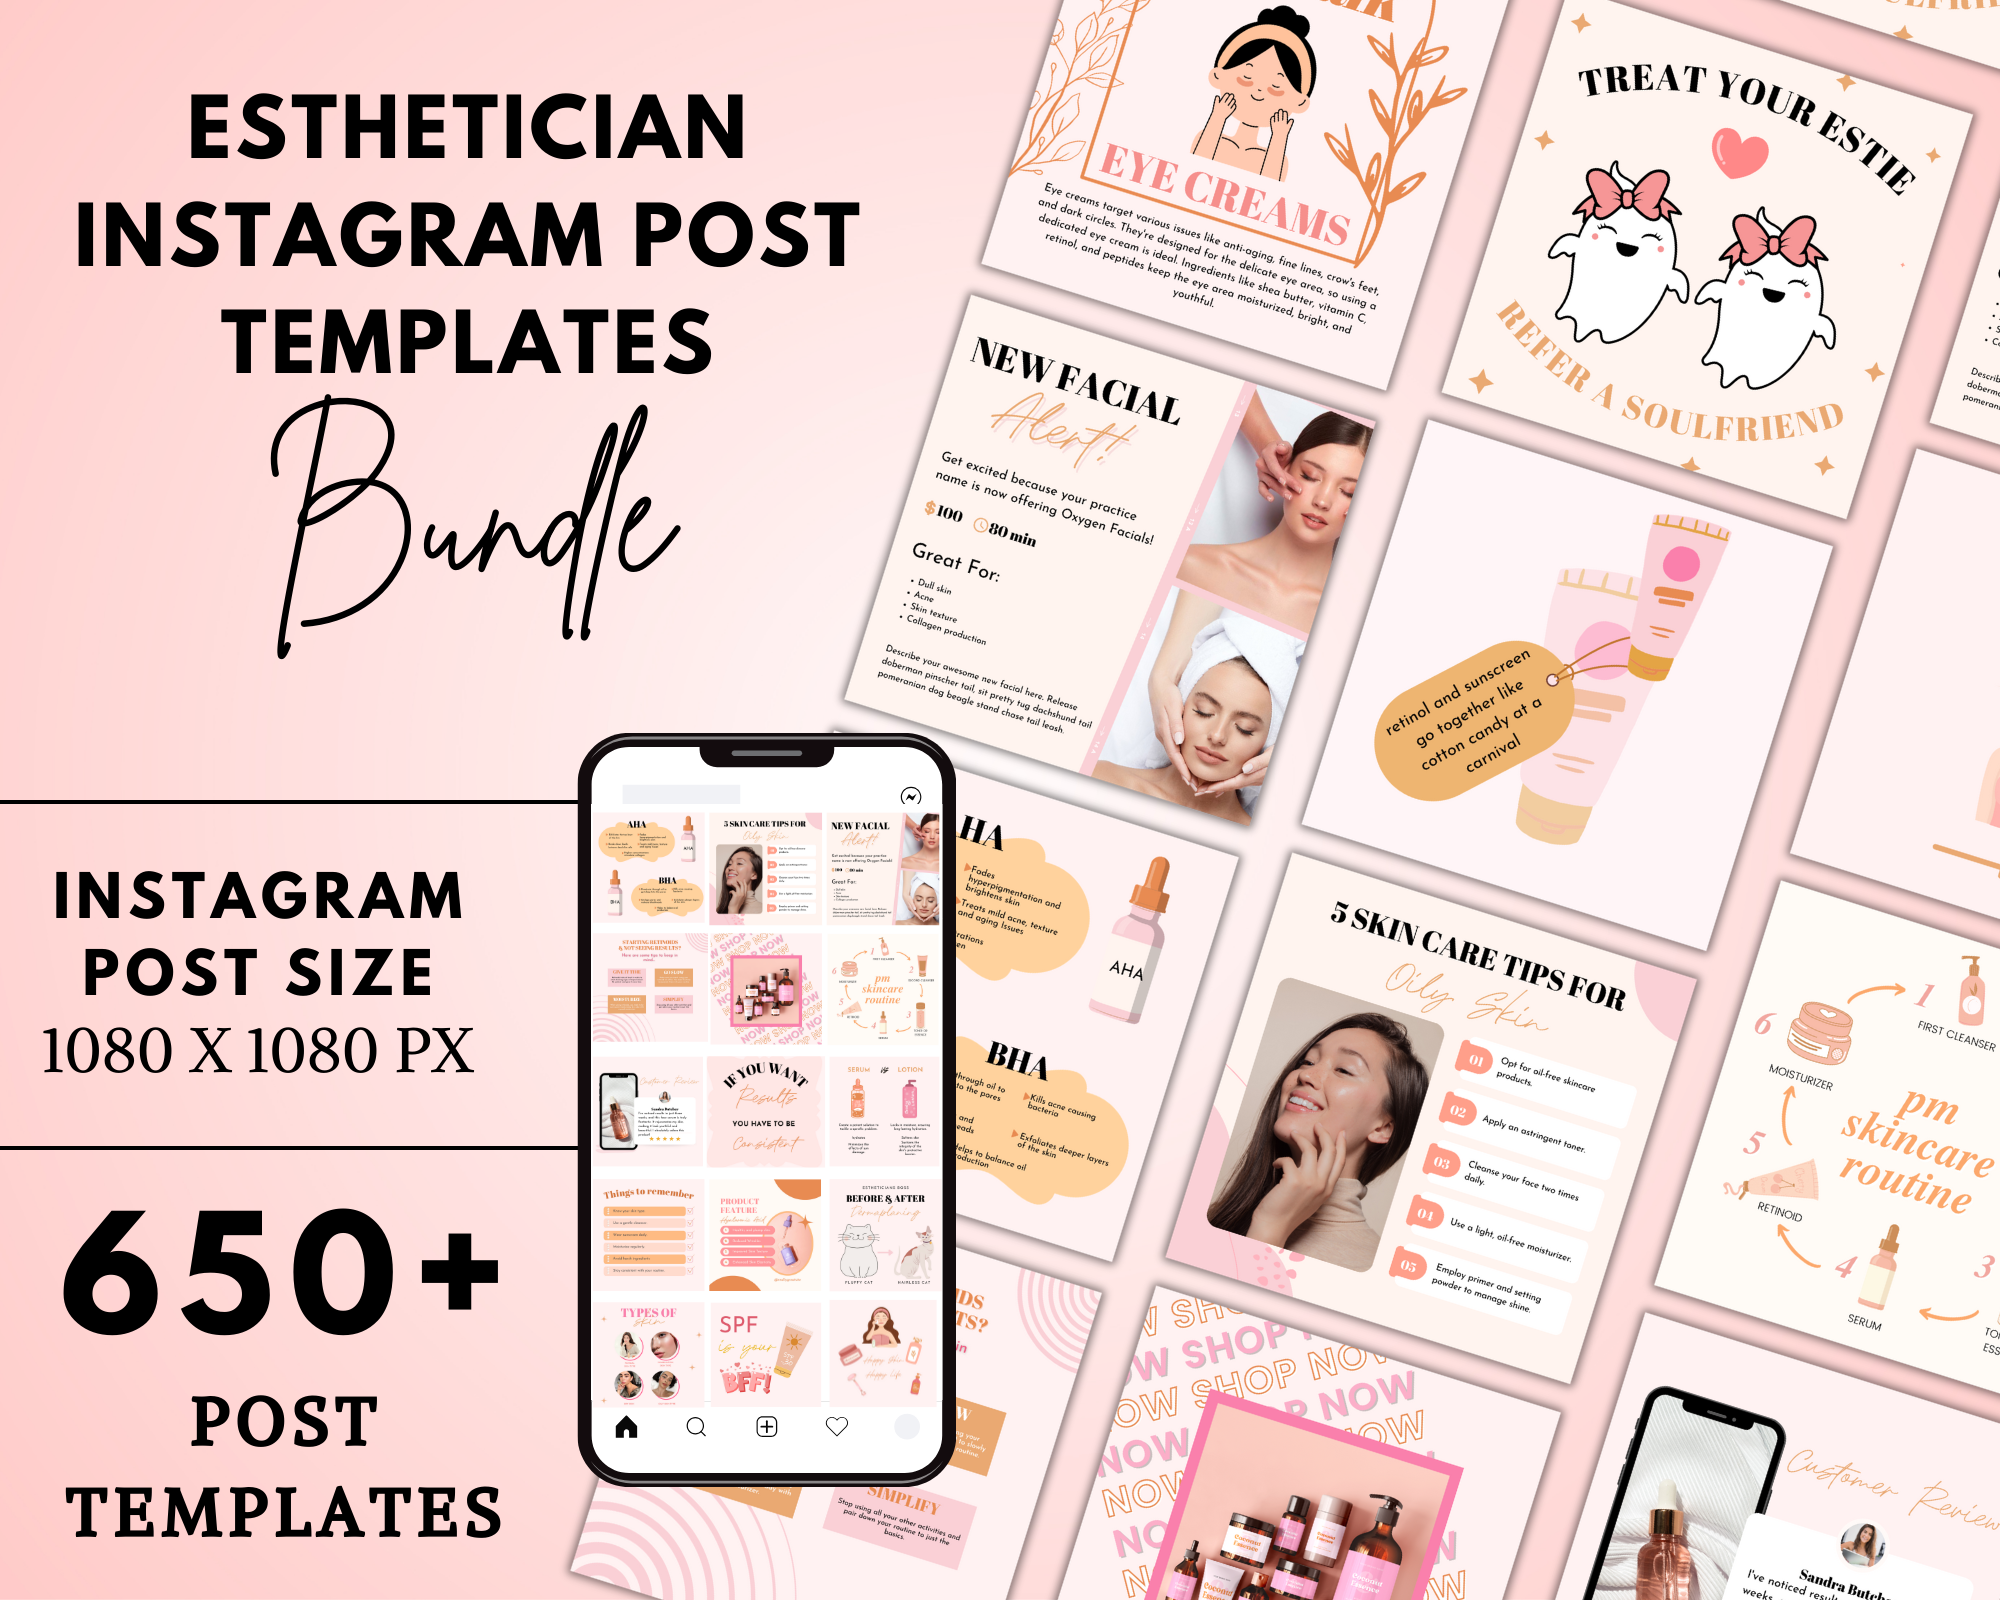 Esthetician Instagram Templates For Skincare Social Media